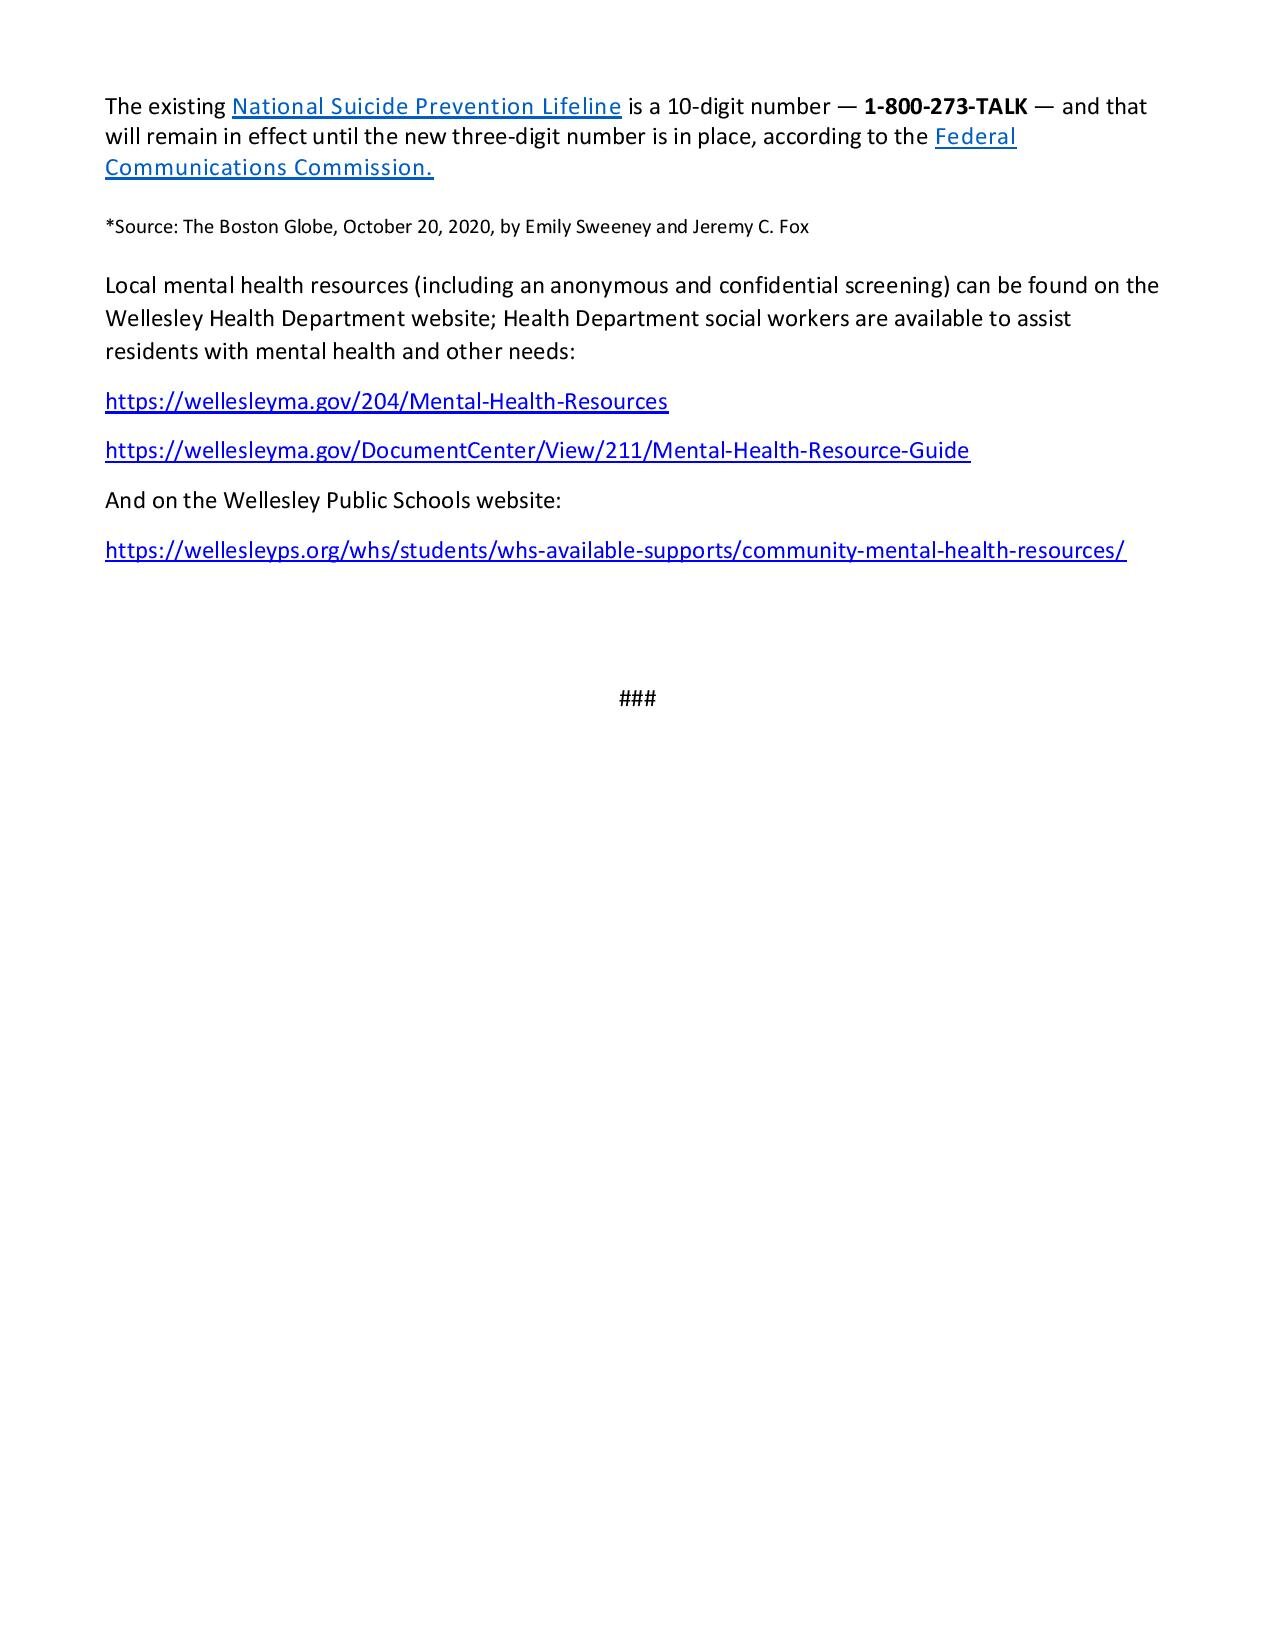 Leonard Morse ER closing and new suicide hotline press release 10-22-2020-page-002.jpg